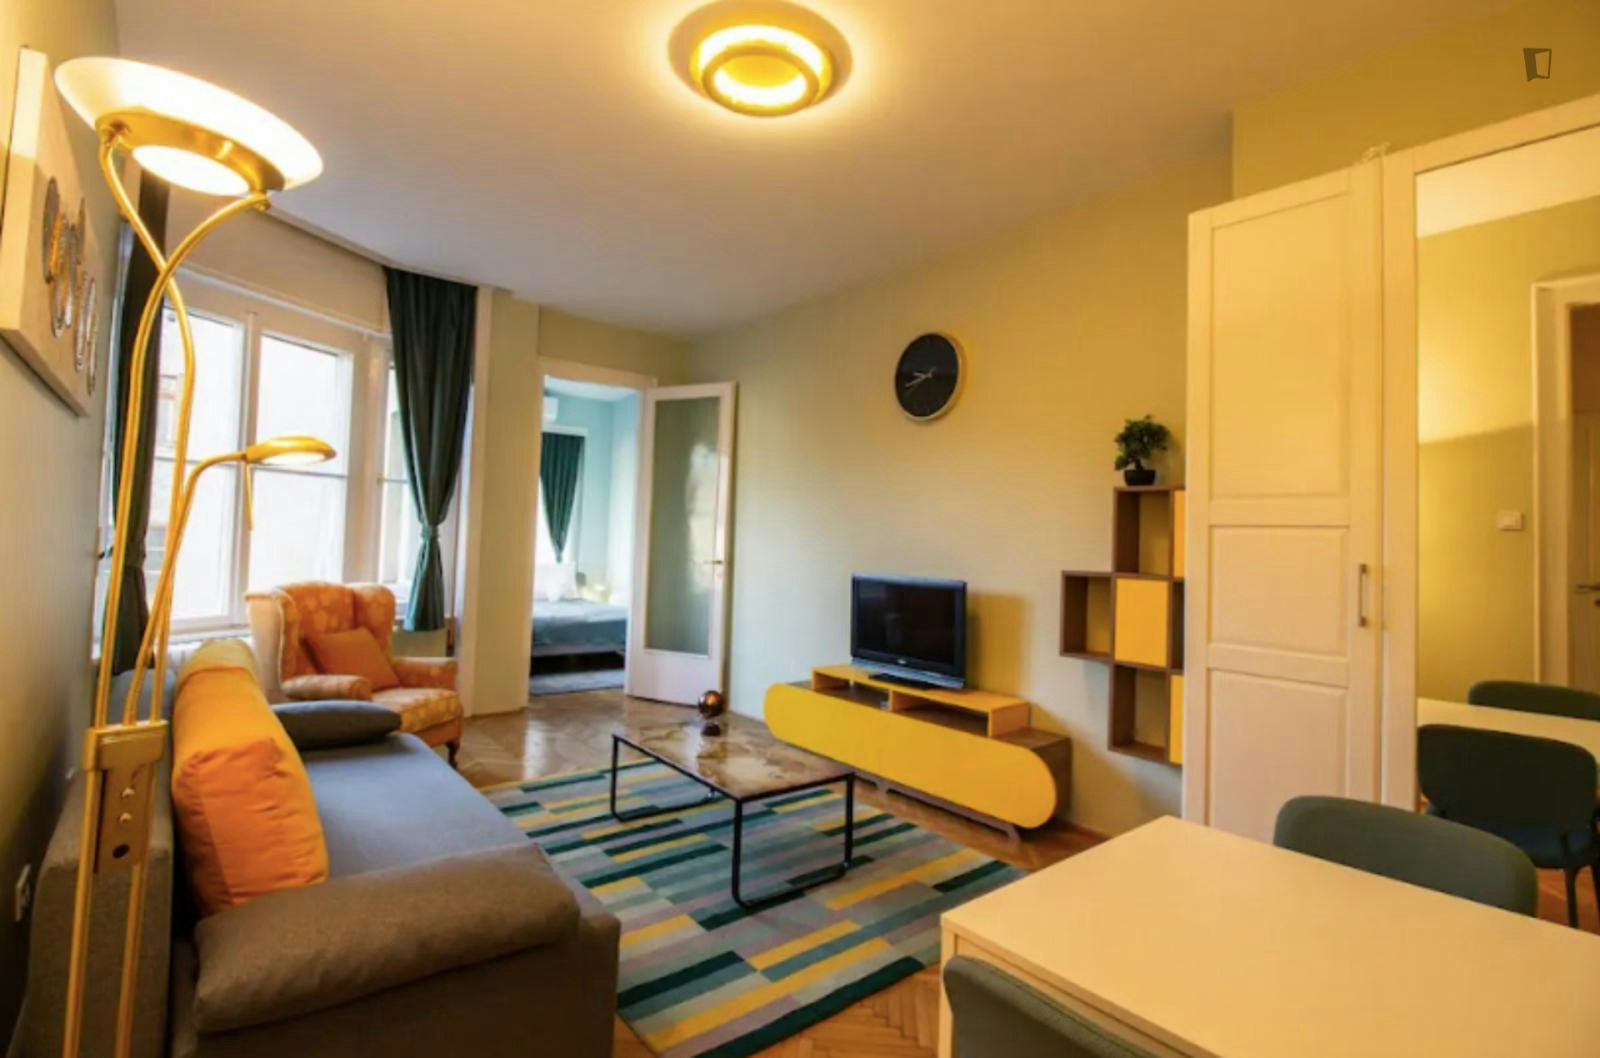 Homely 1-bedroom apartment near the Margit Bridge